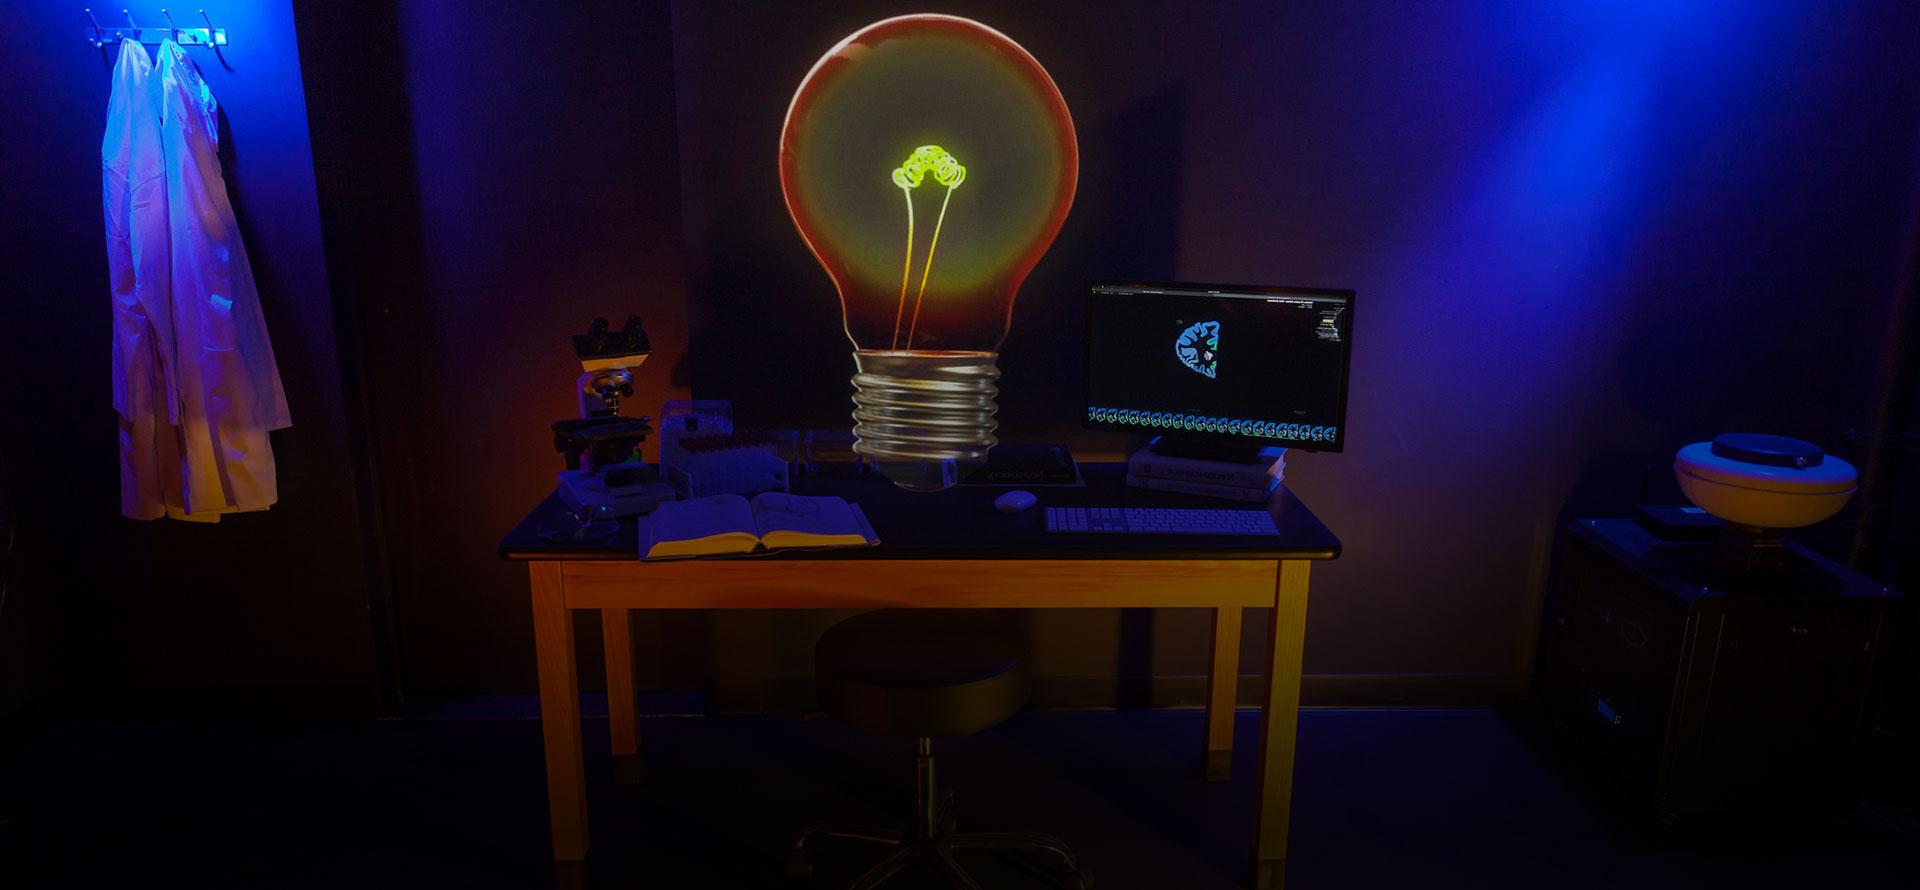 Desk with image of lightbulb on it